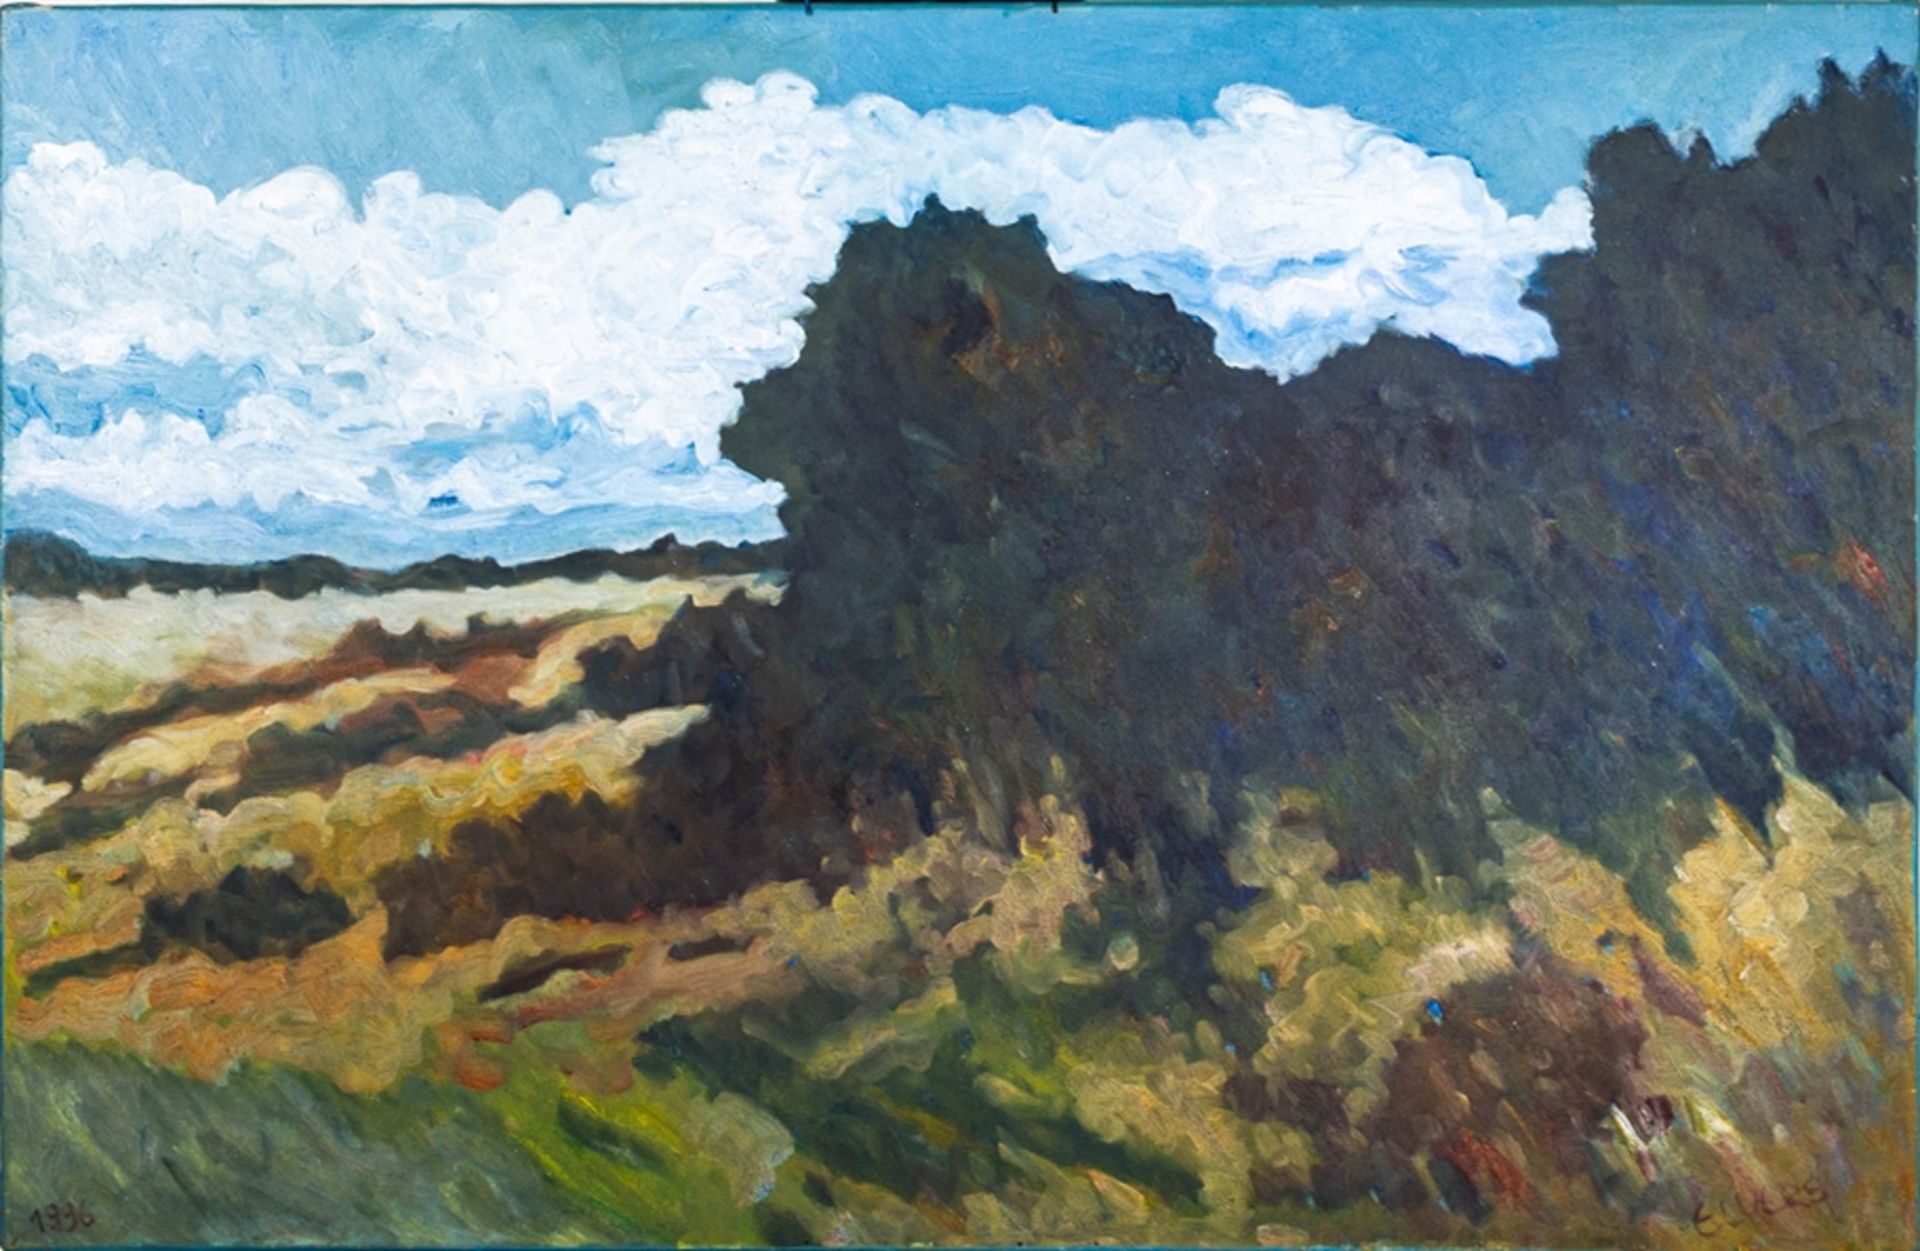 "Landschaft", Gemälde,Öl auf Leinwand, ca. 90 x 140 cm, signiert unten rechts "